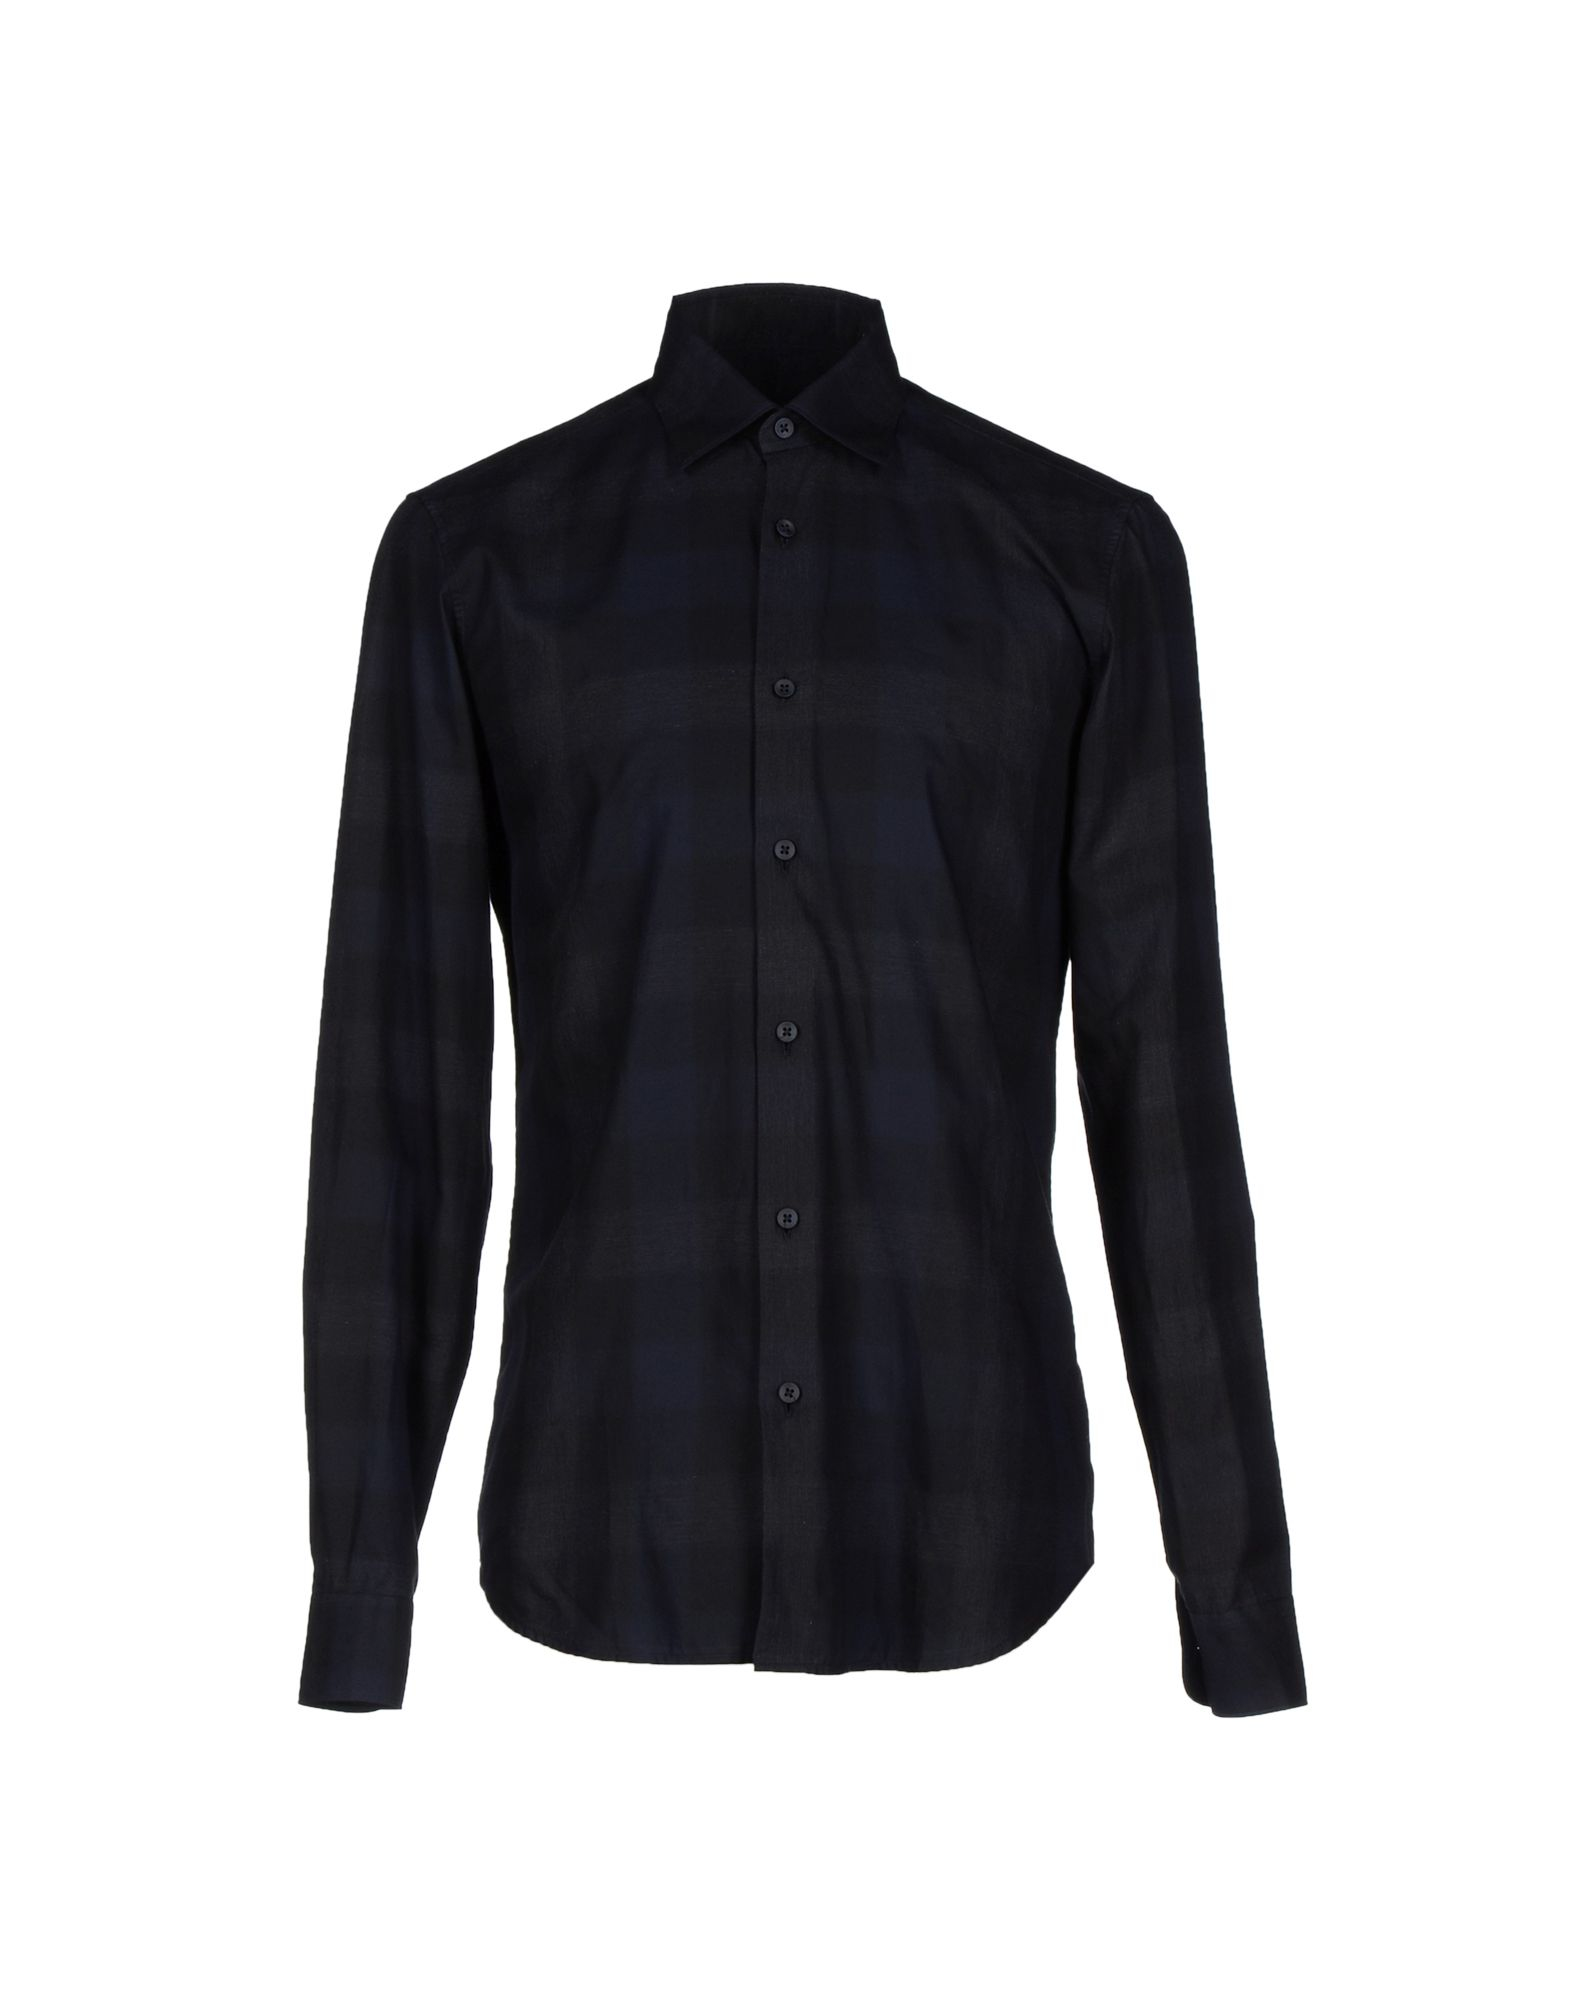 Z Zegna Cotton Shirt in Black for Men - Lyst